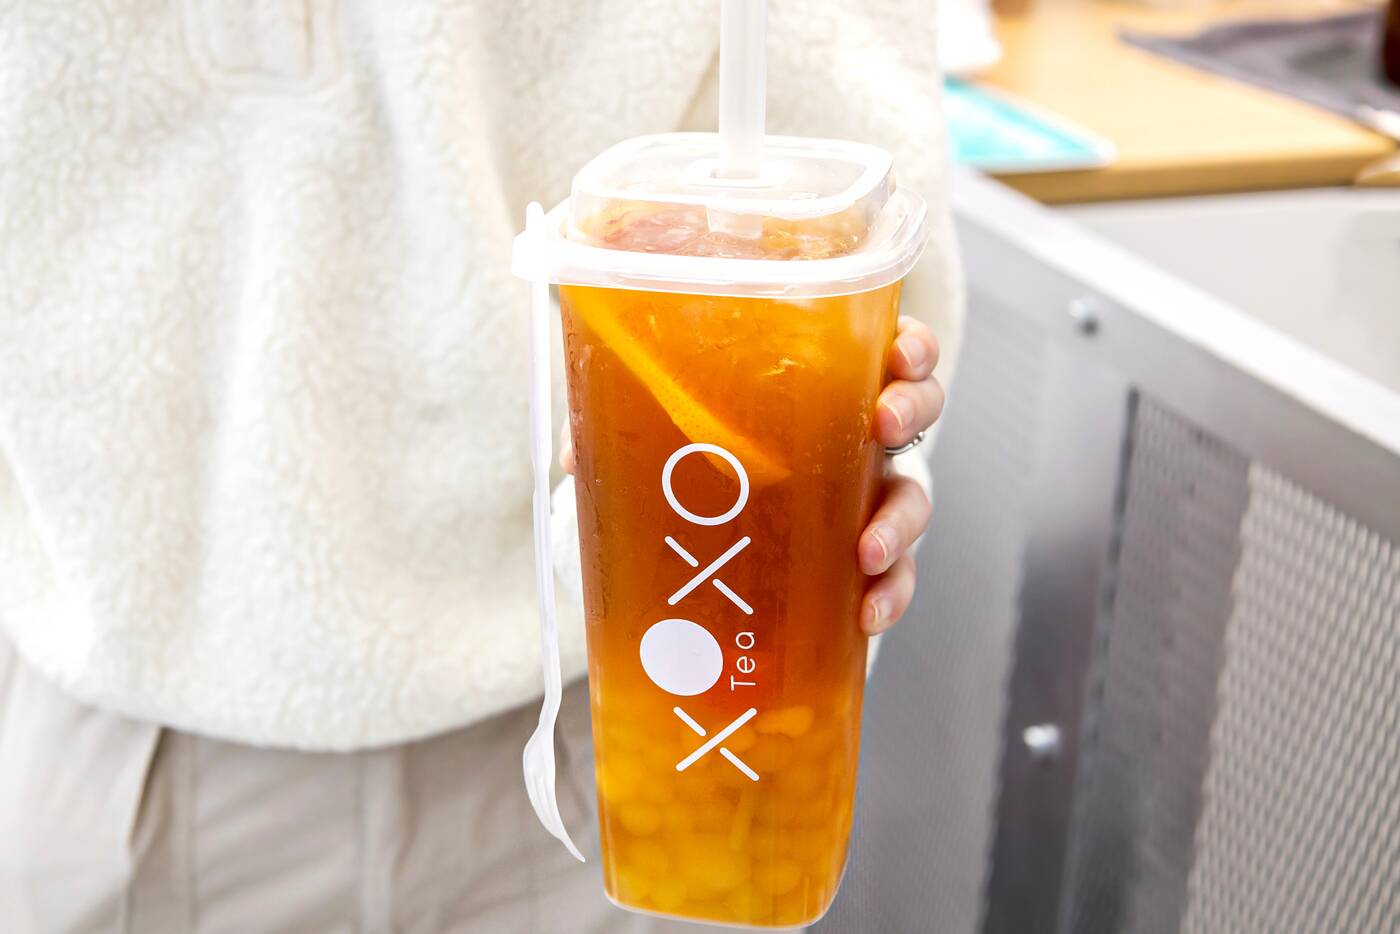 xoxo tea toronto